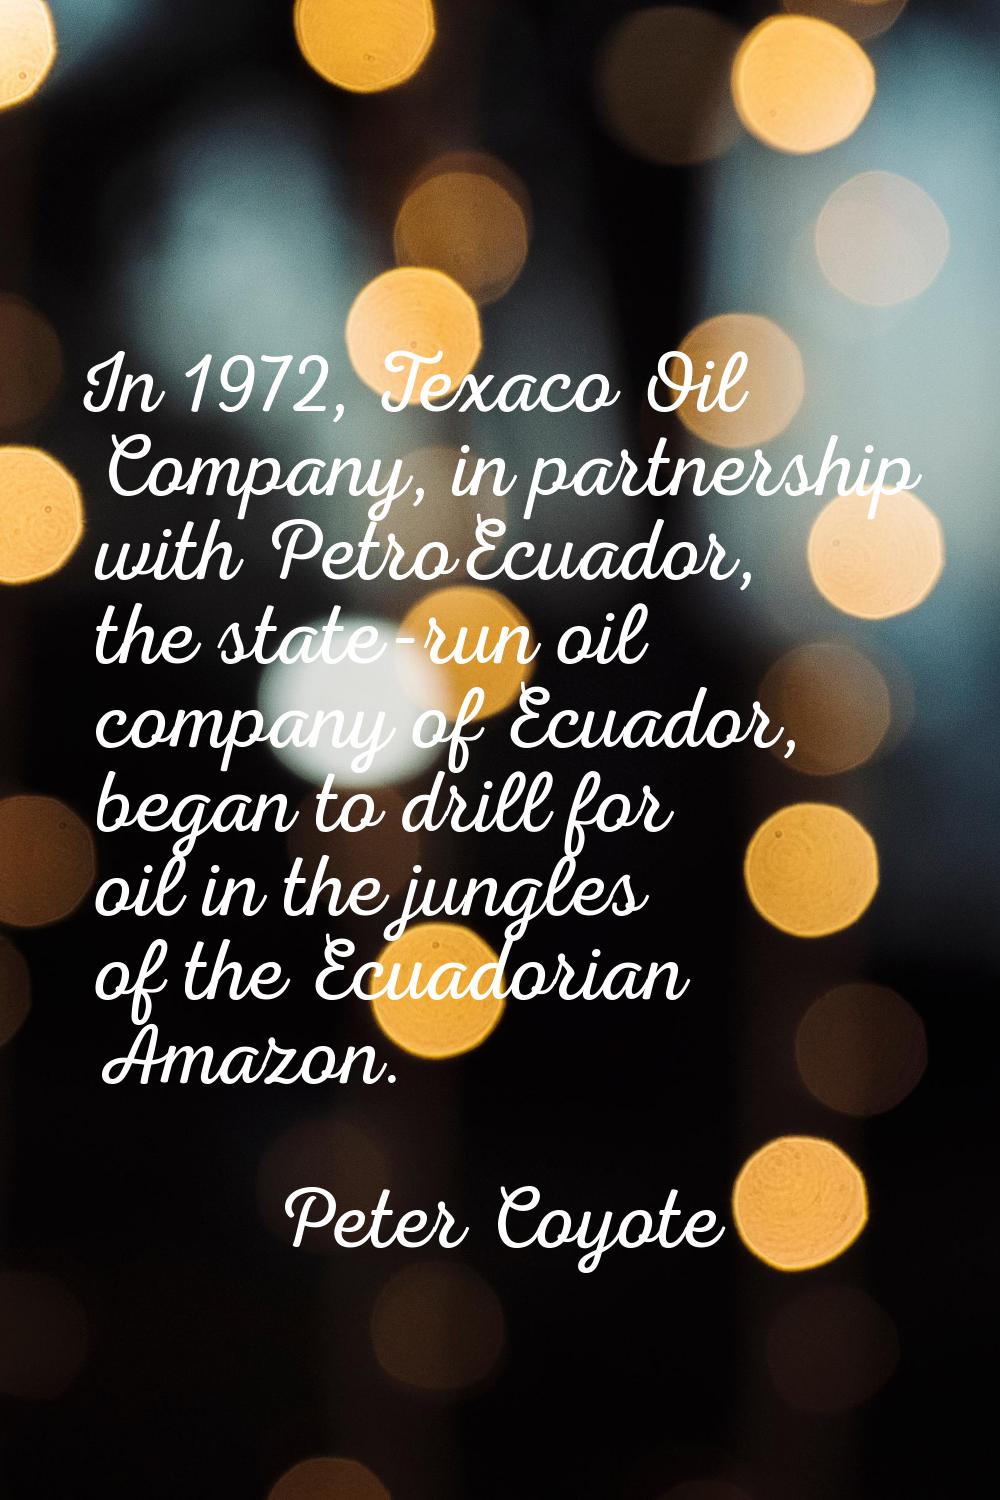 In 1972, Texaco Oil Company, in partnership with PetroEcuador, the state-run oil company of Ecuador